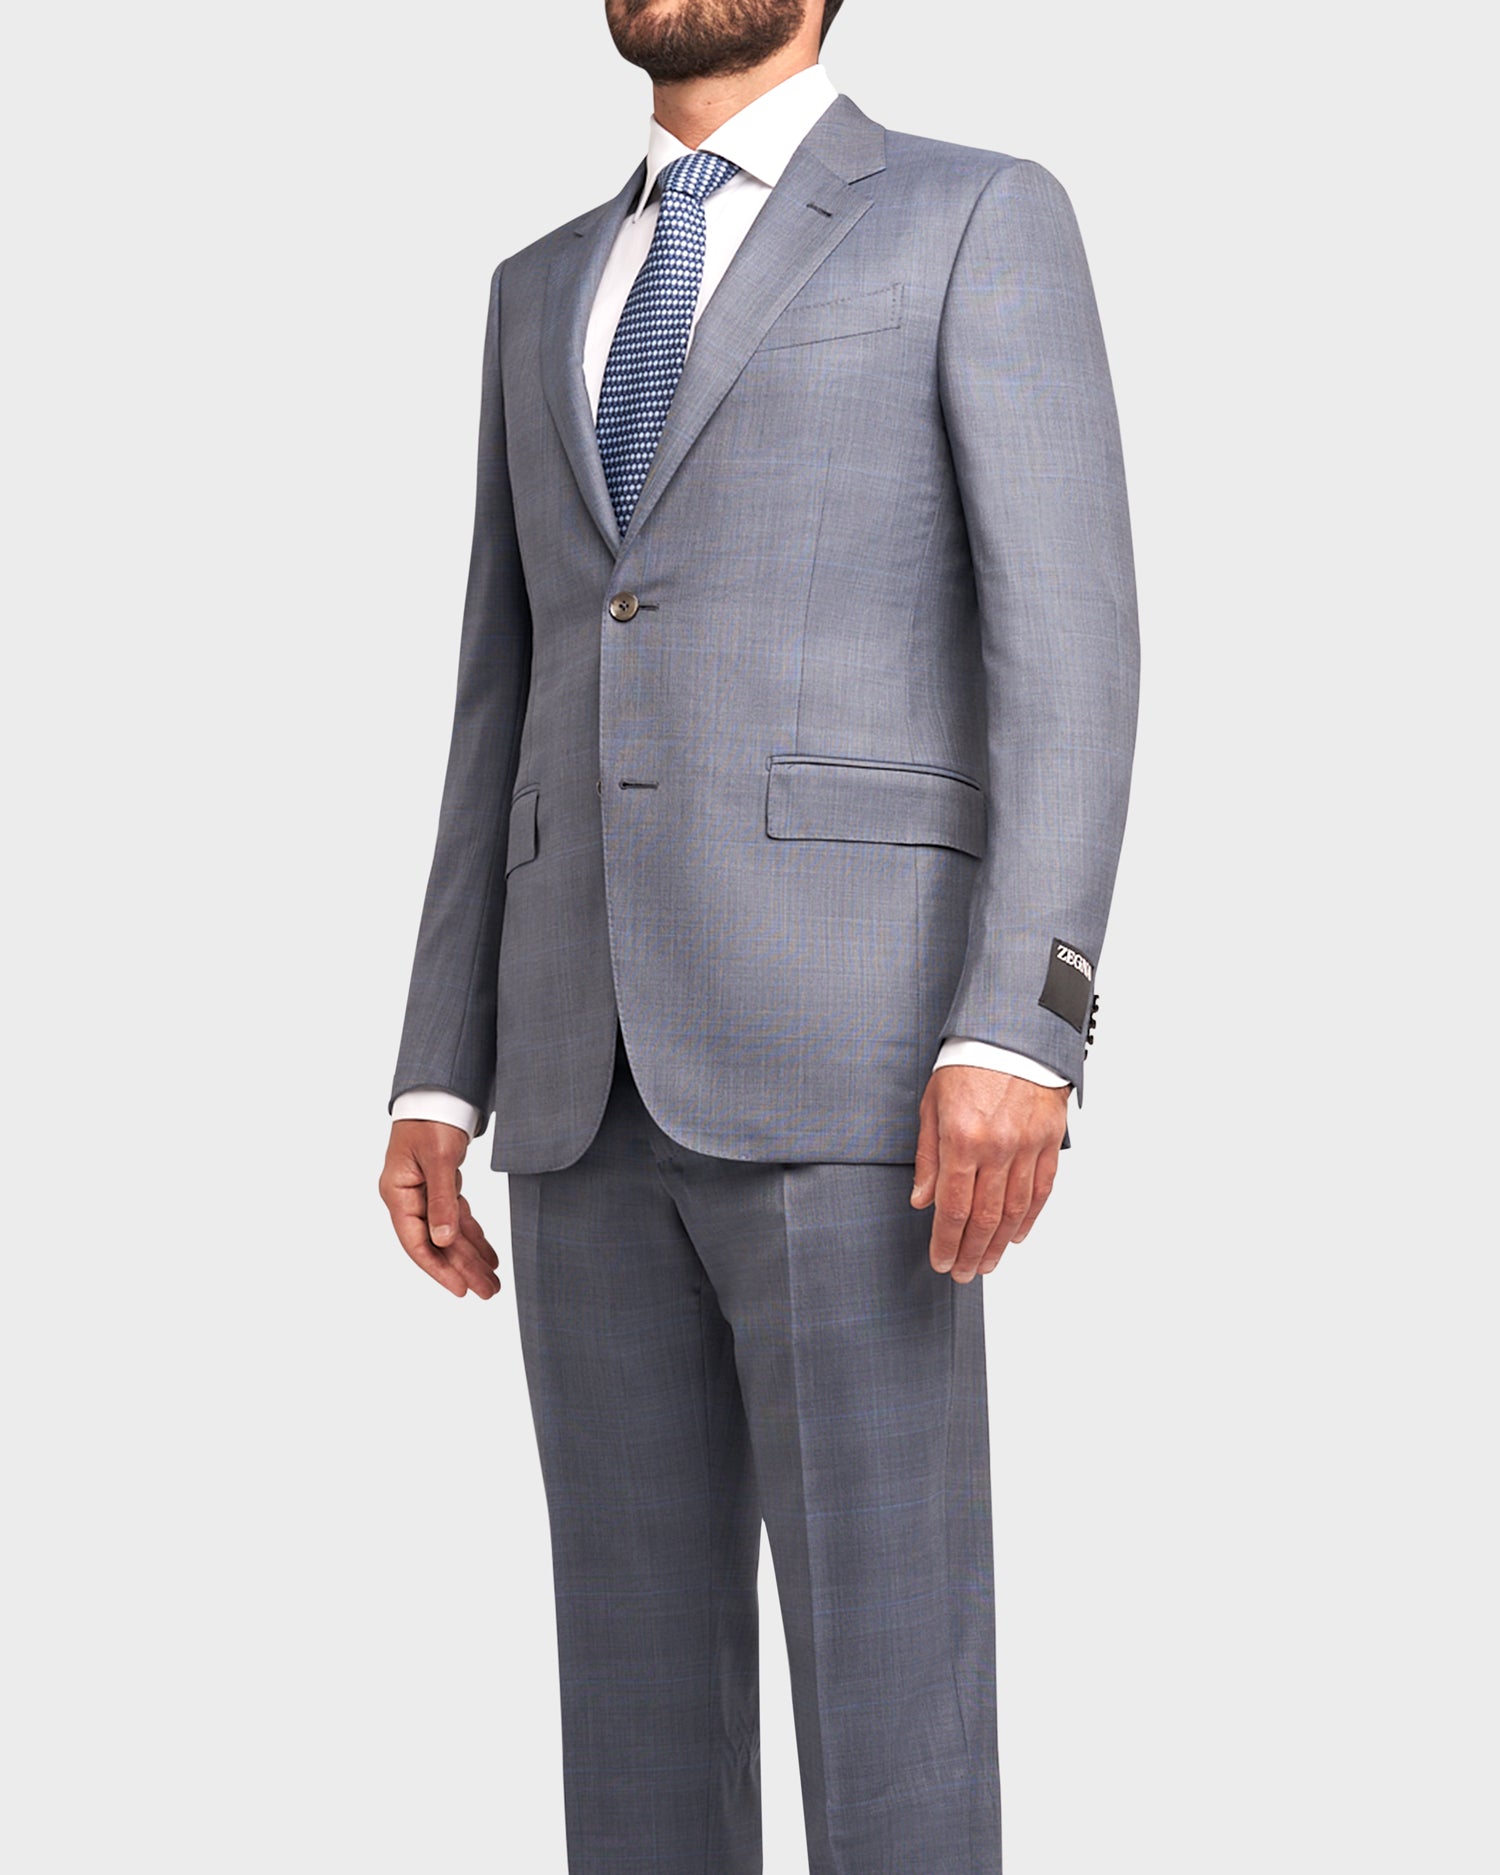 Pale Grey Blue Windowpane Check 15milmil15 Wool Suit